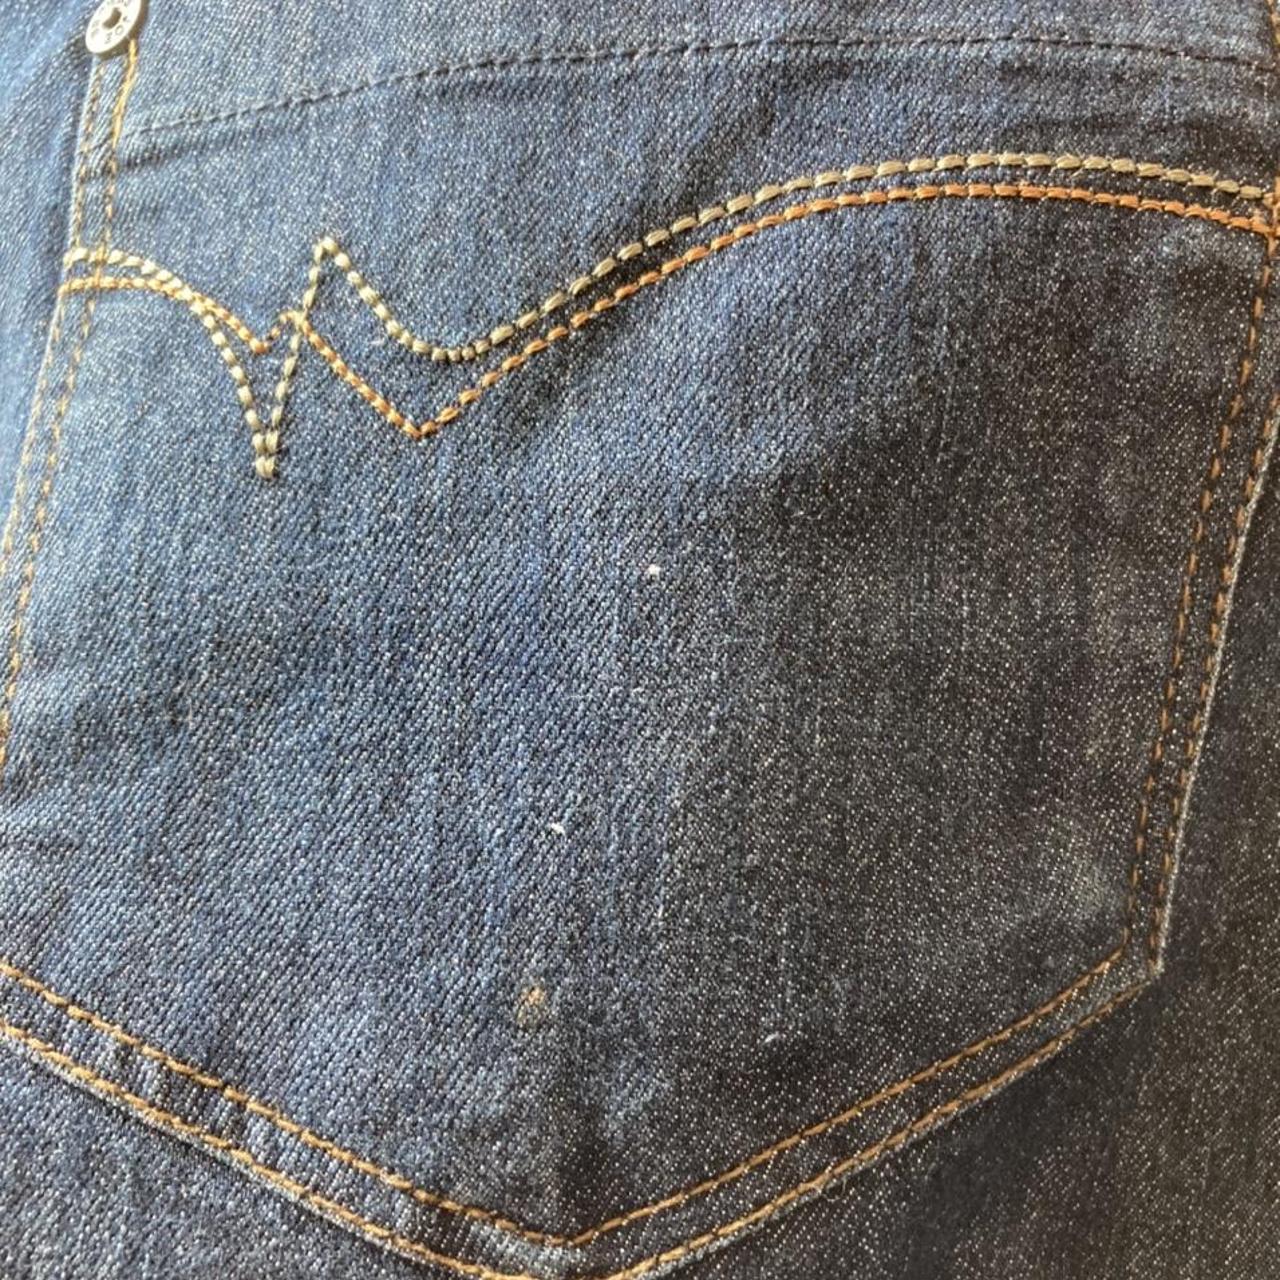 Product Image 3 - Plus size blue jeans, not